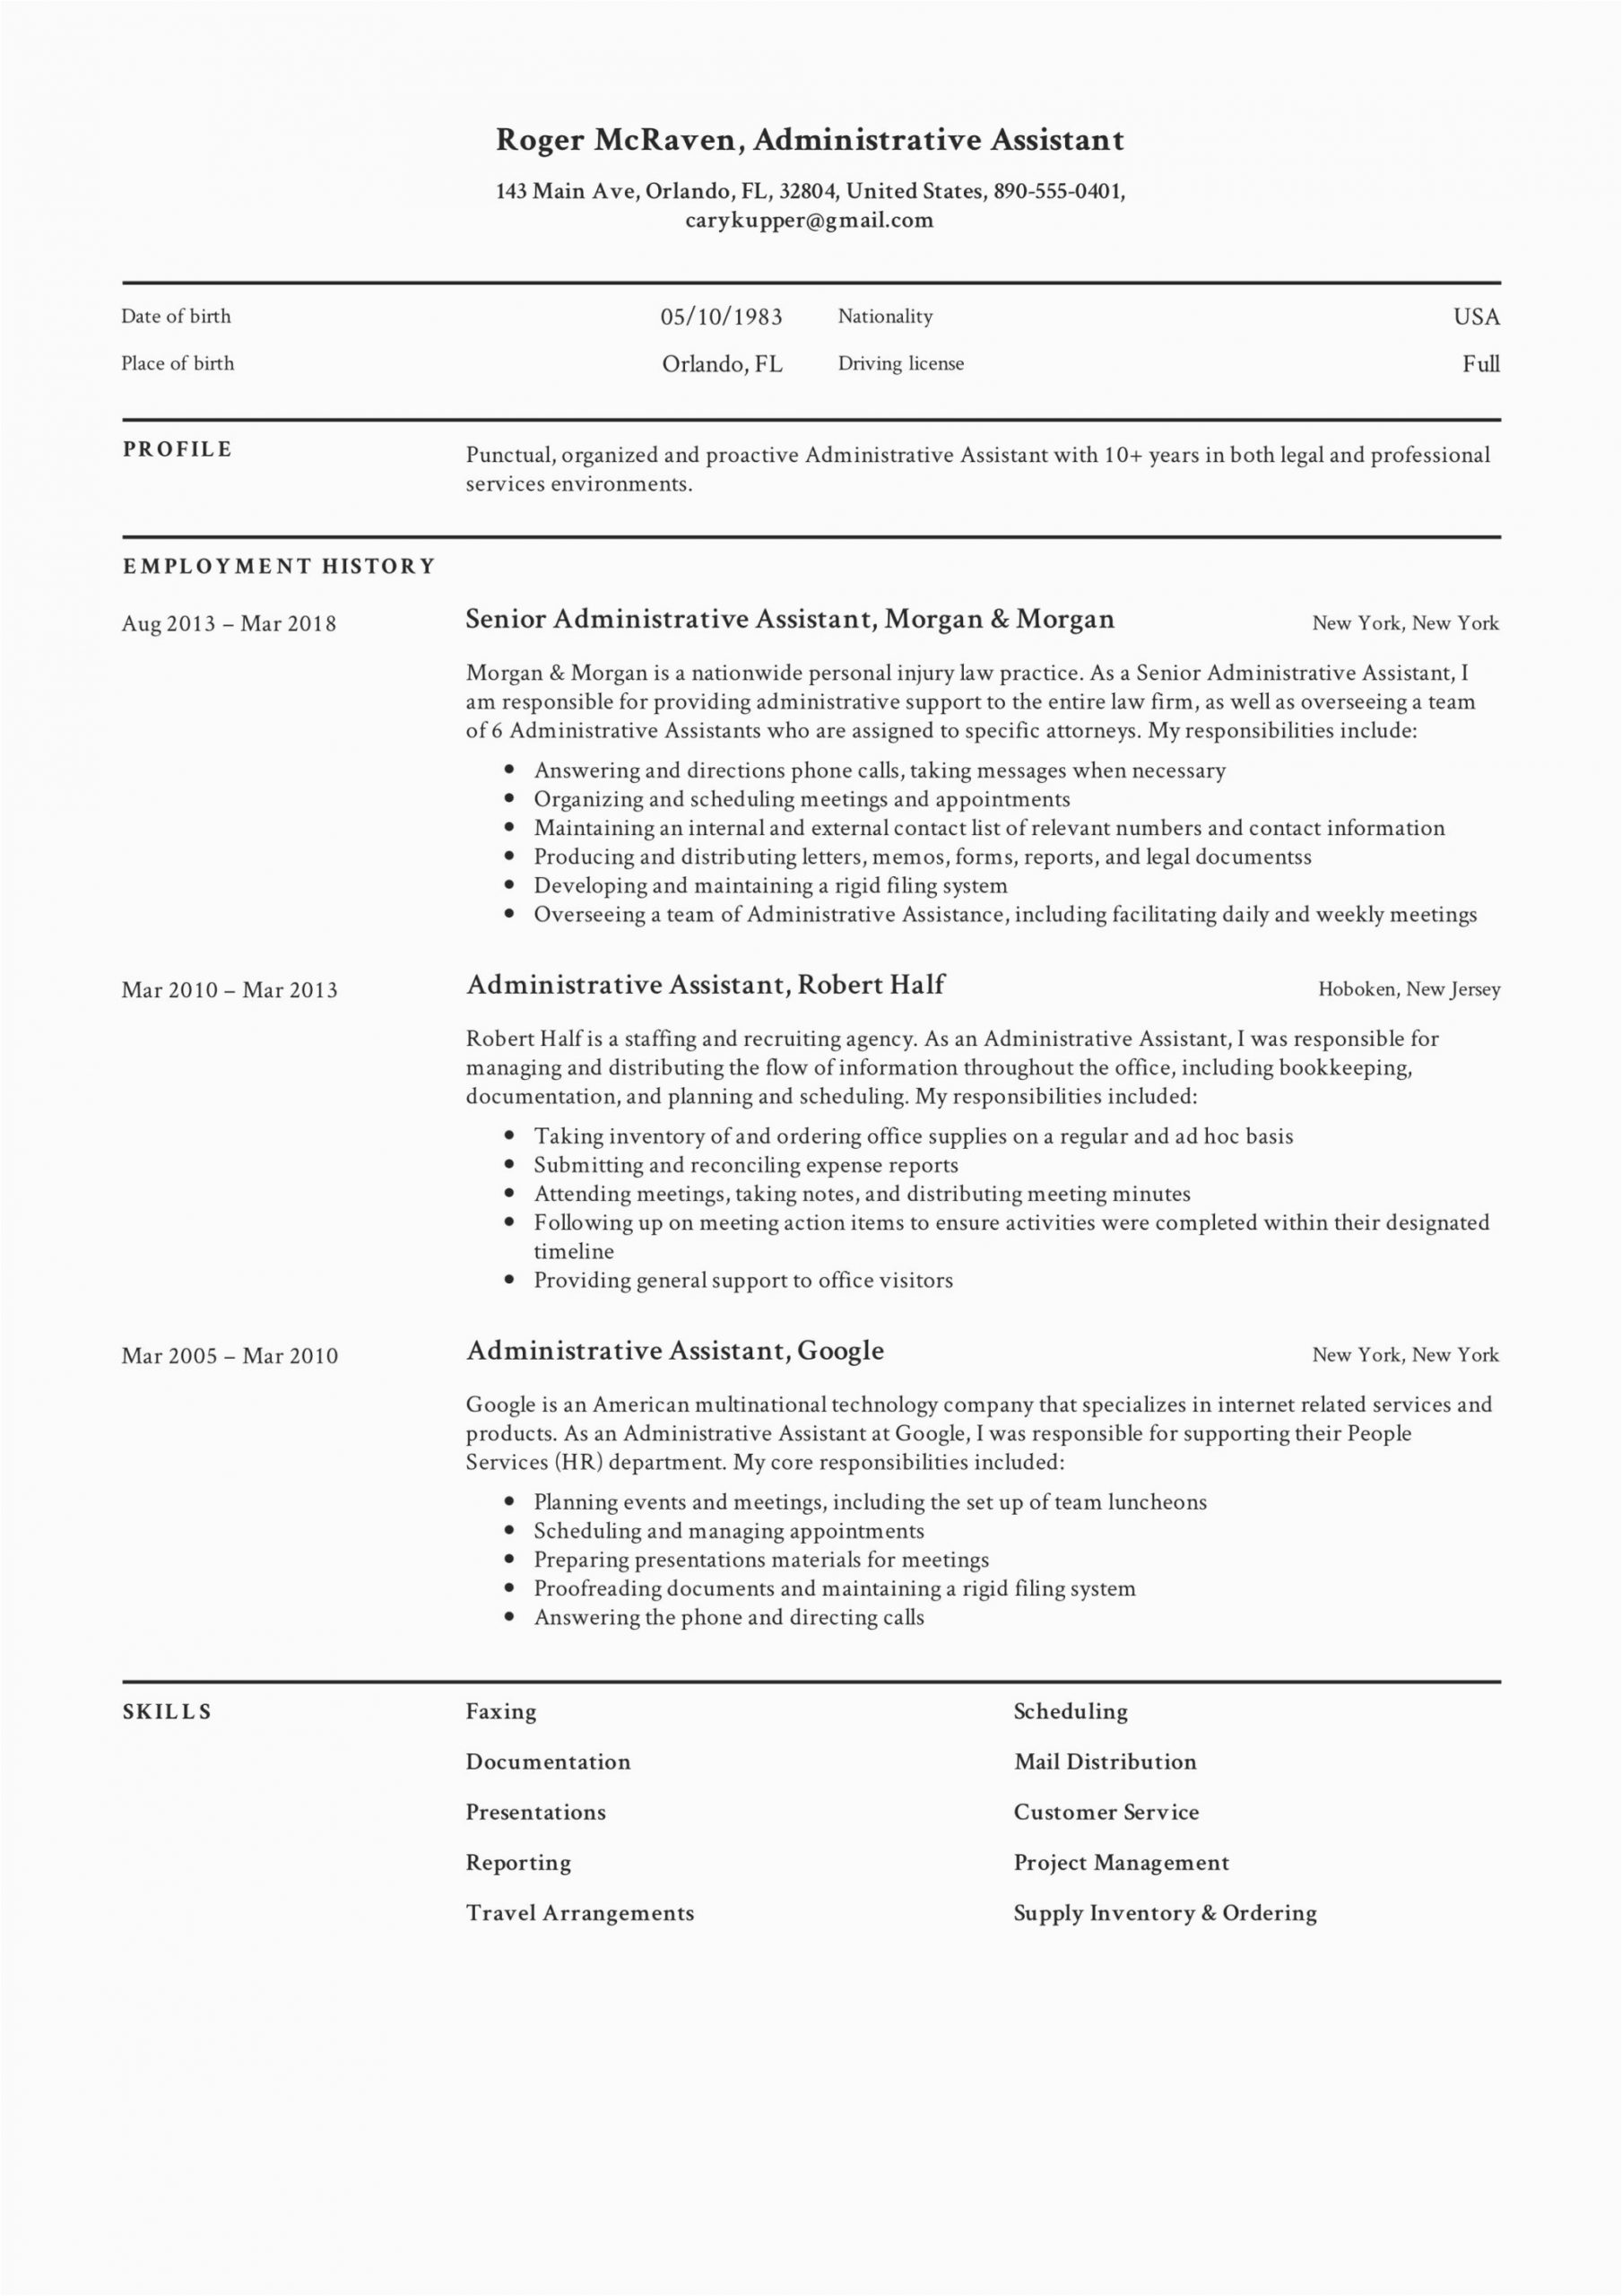 Sample Professional Resume for Administrative assistant Full Guide Administrative assistant Resume [ 12 Samples